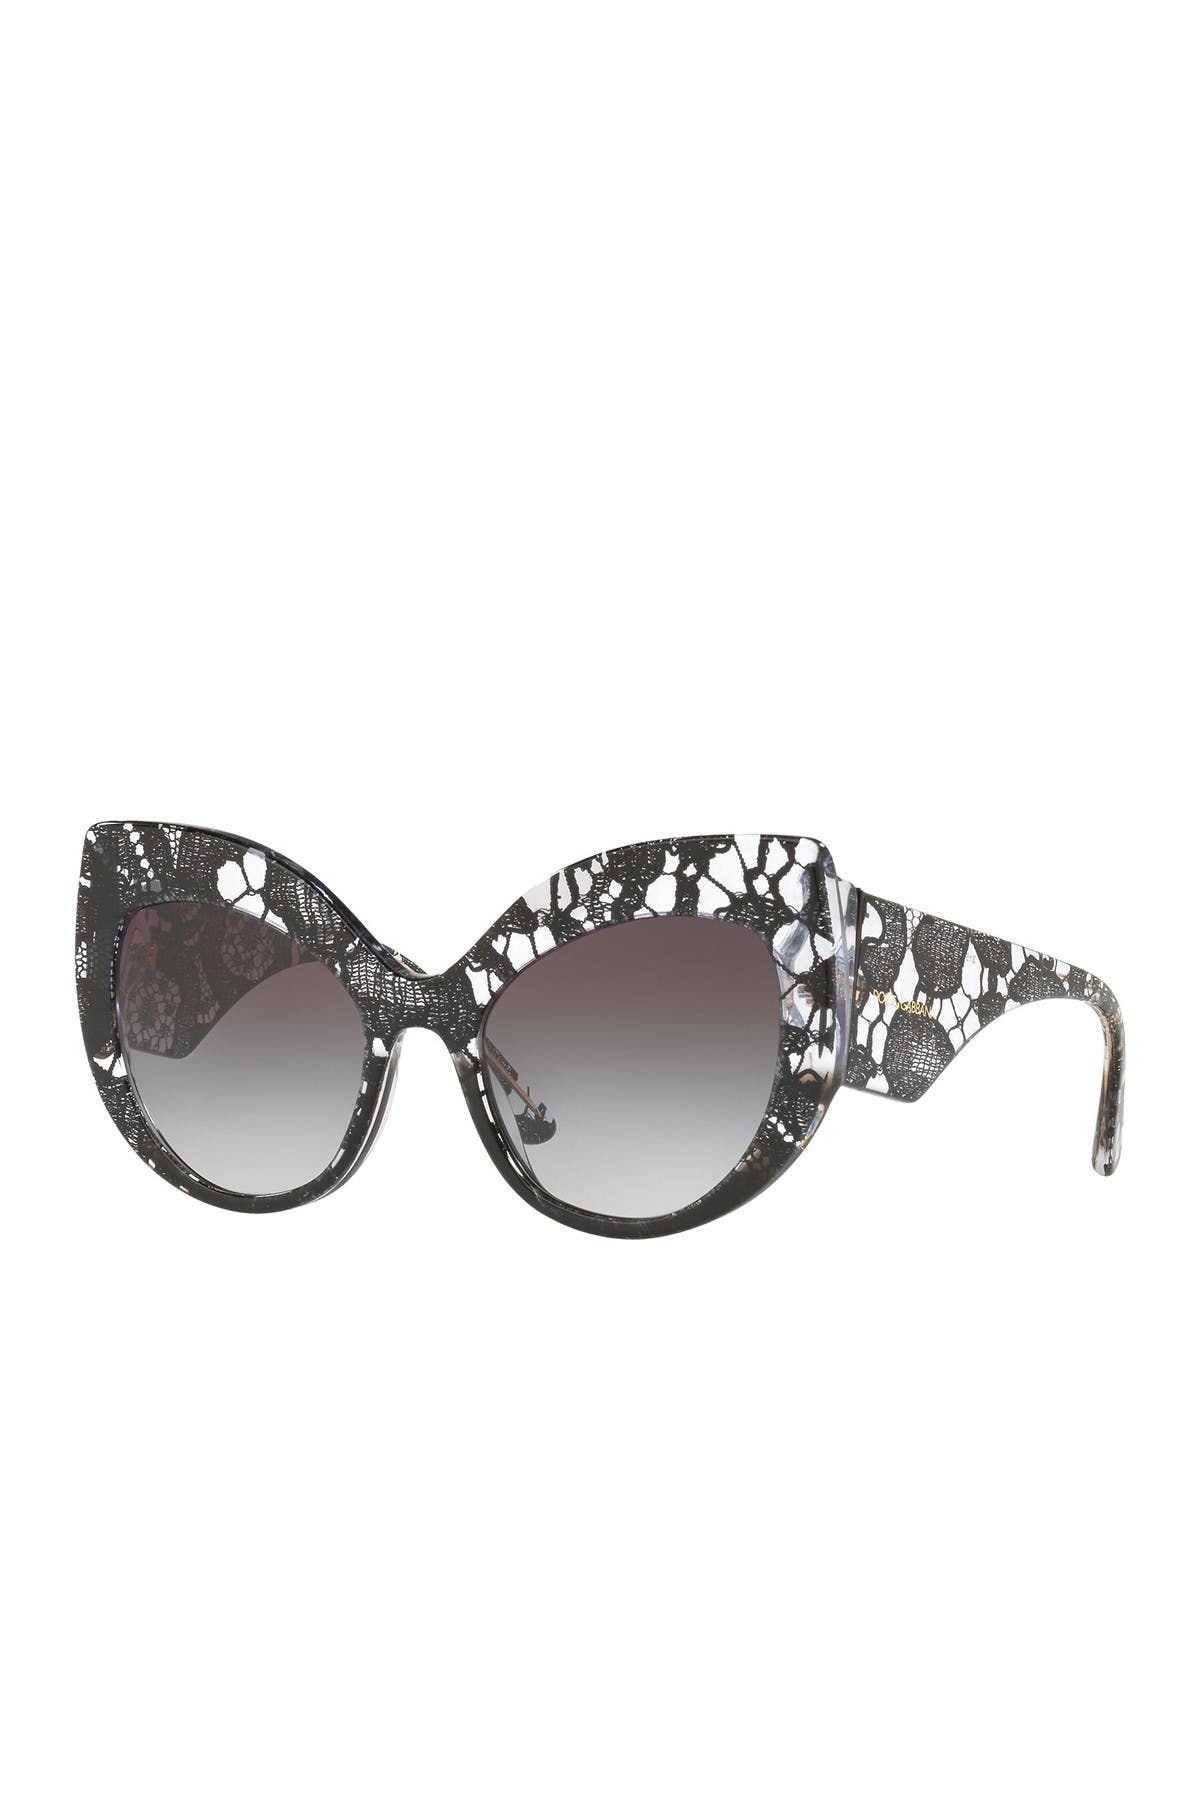 dolce and gabbana diamond sunglasses